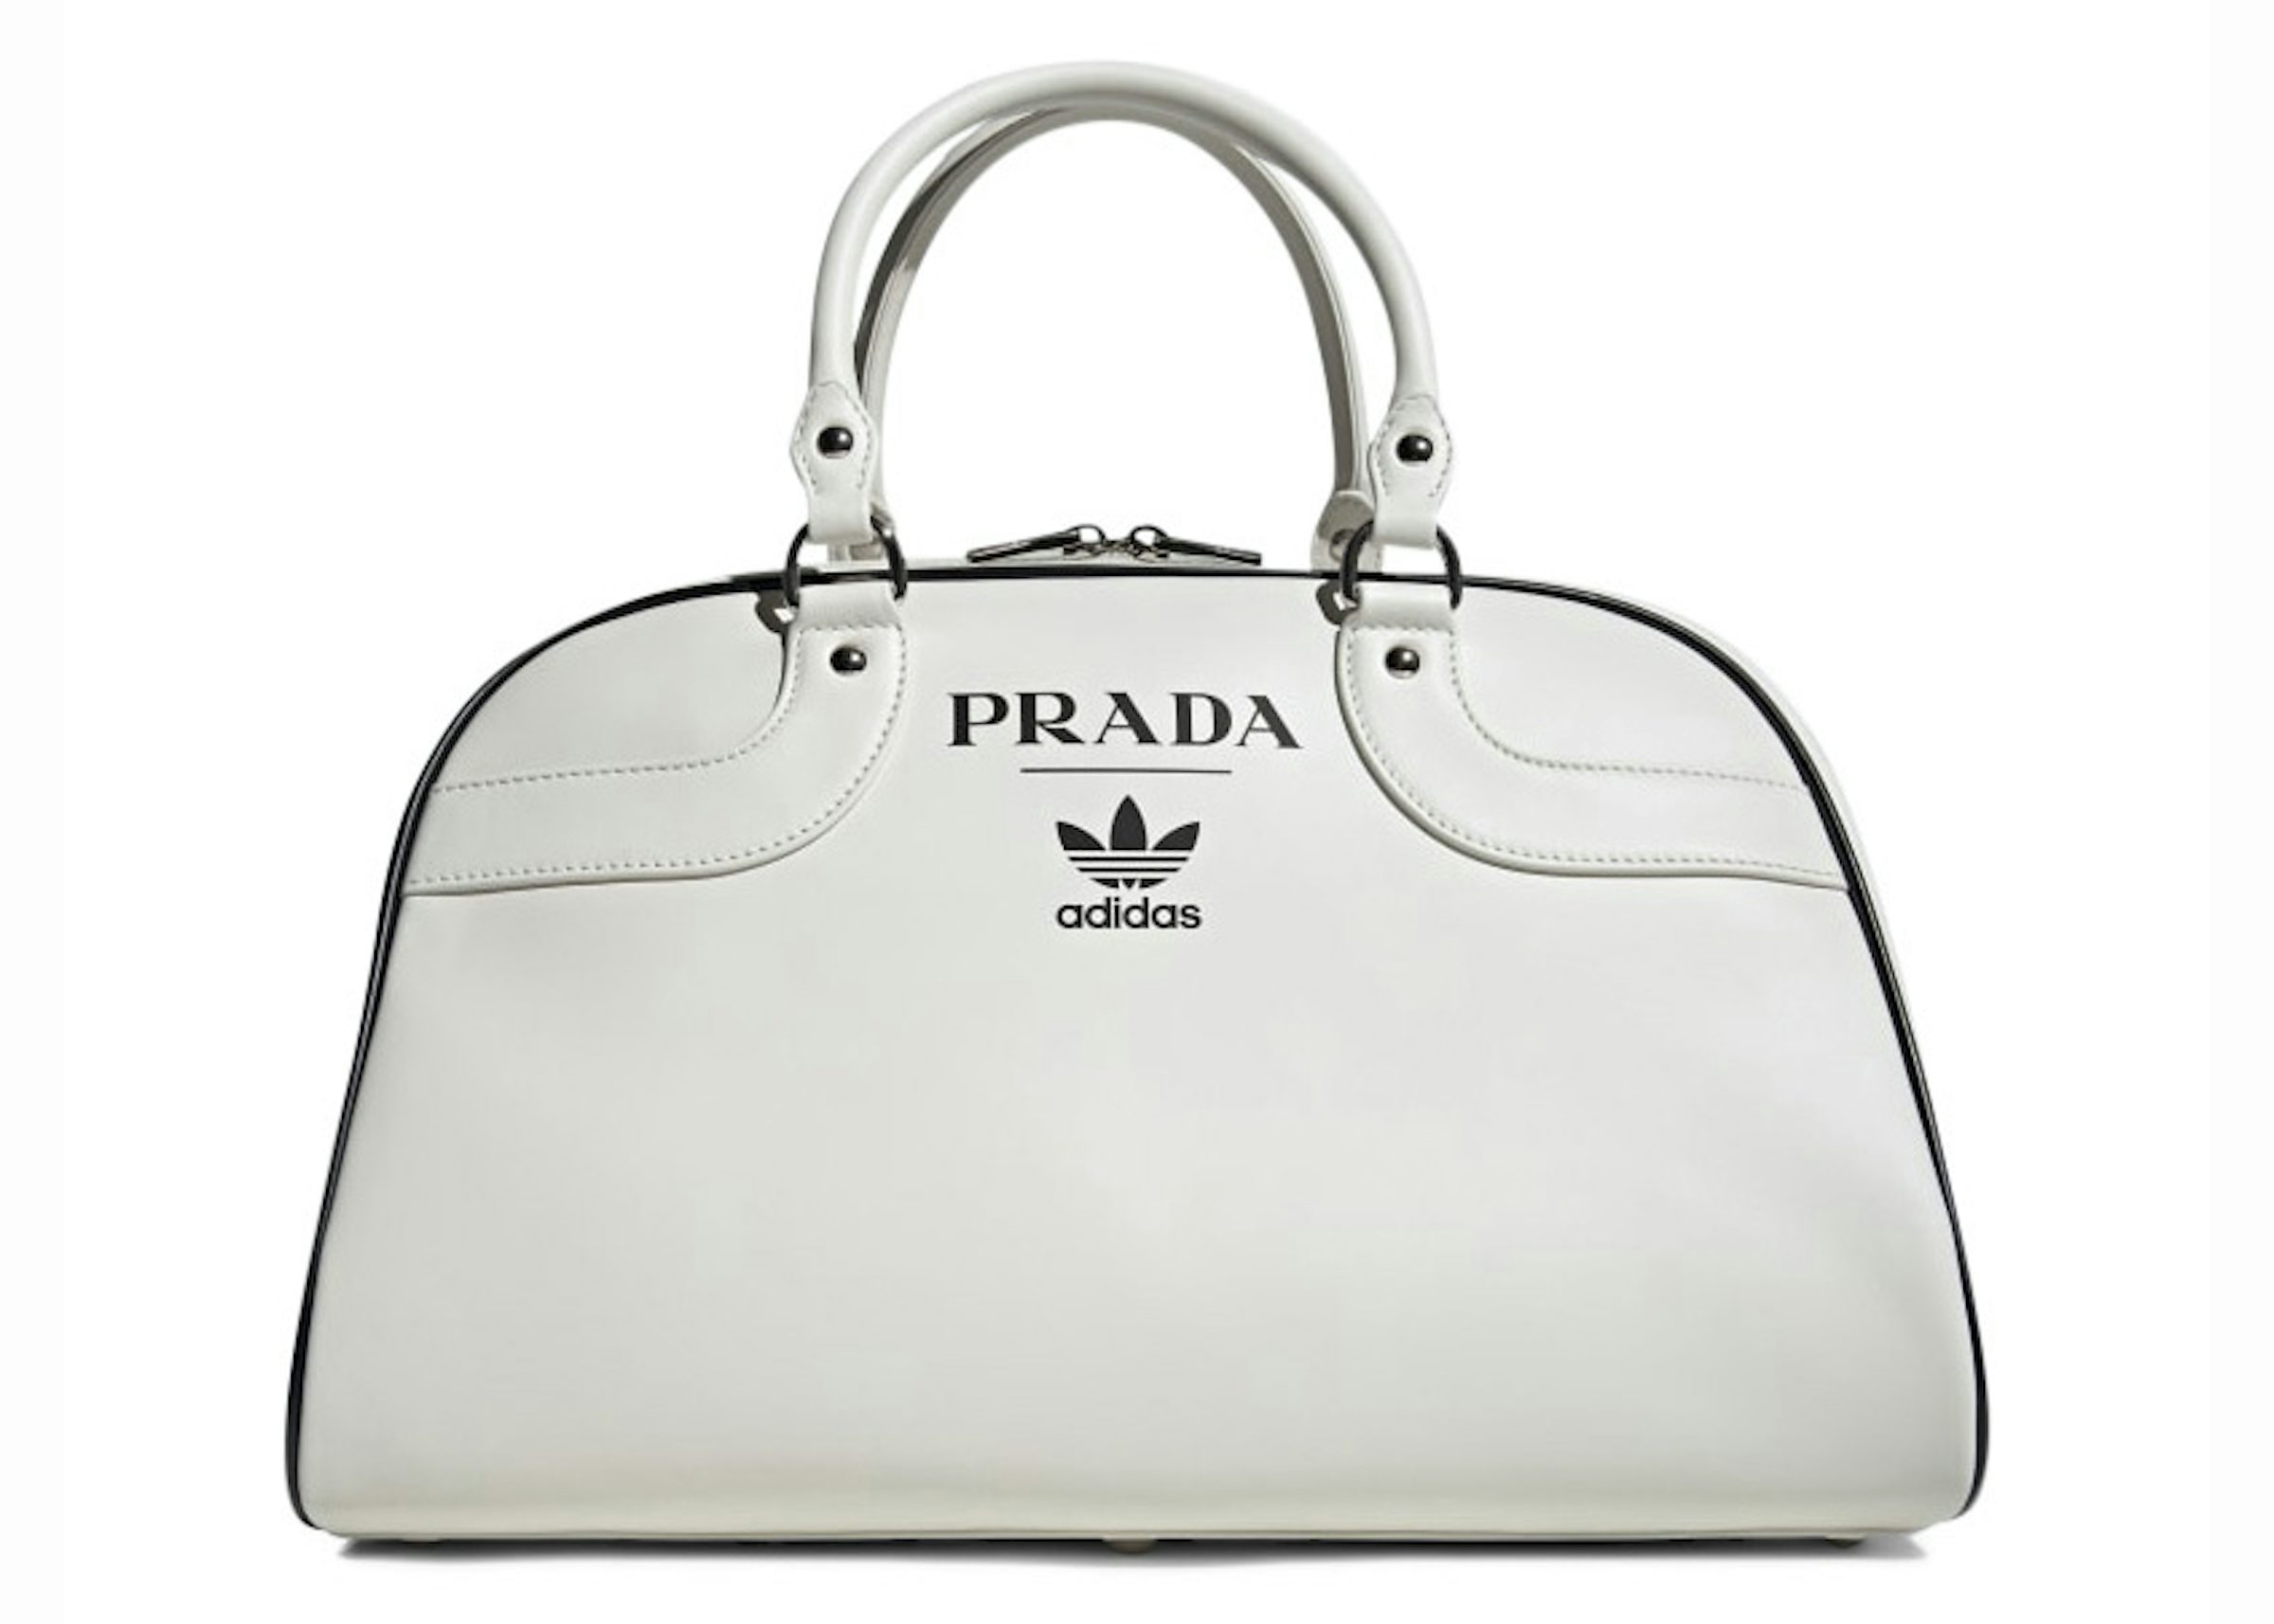 StockX on X: A trendy take on a classic shape 🖤 Prada's Re